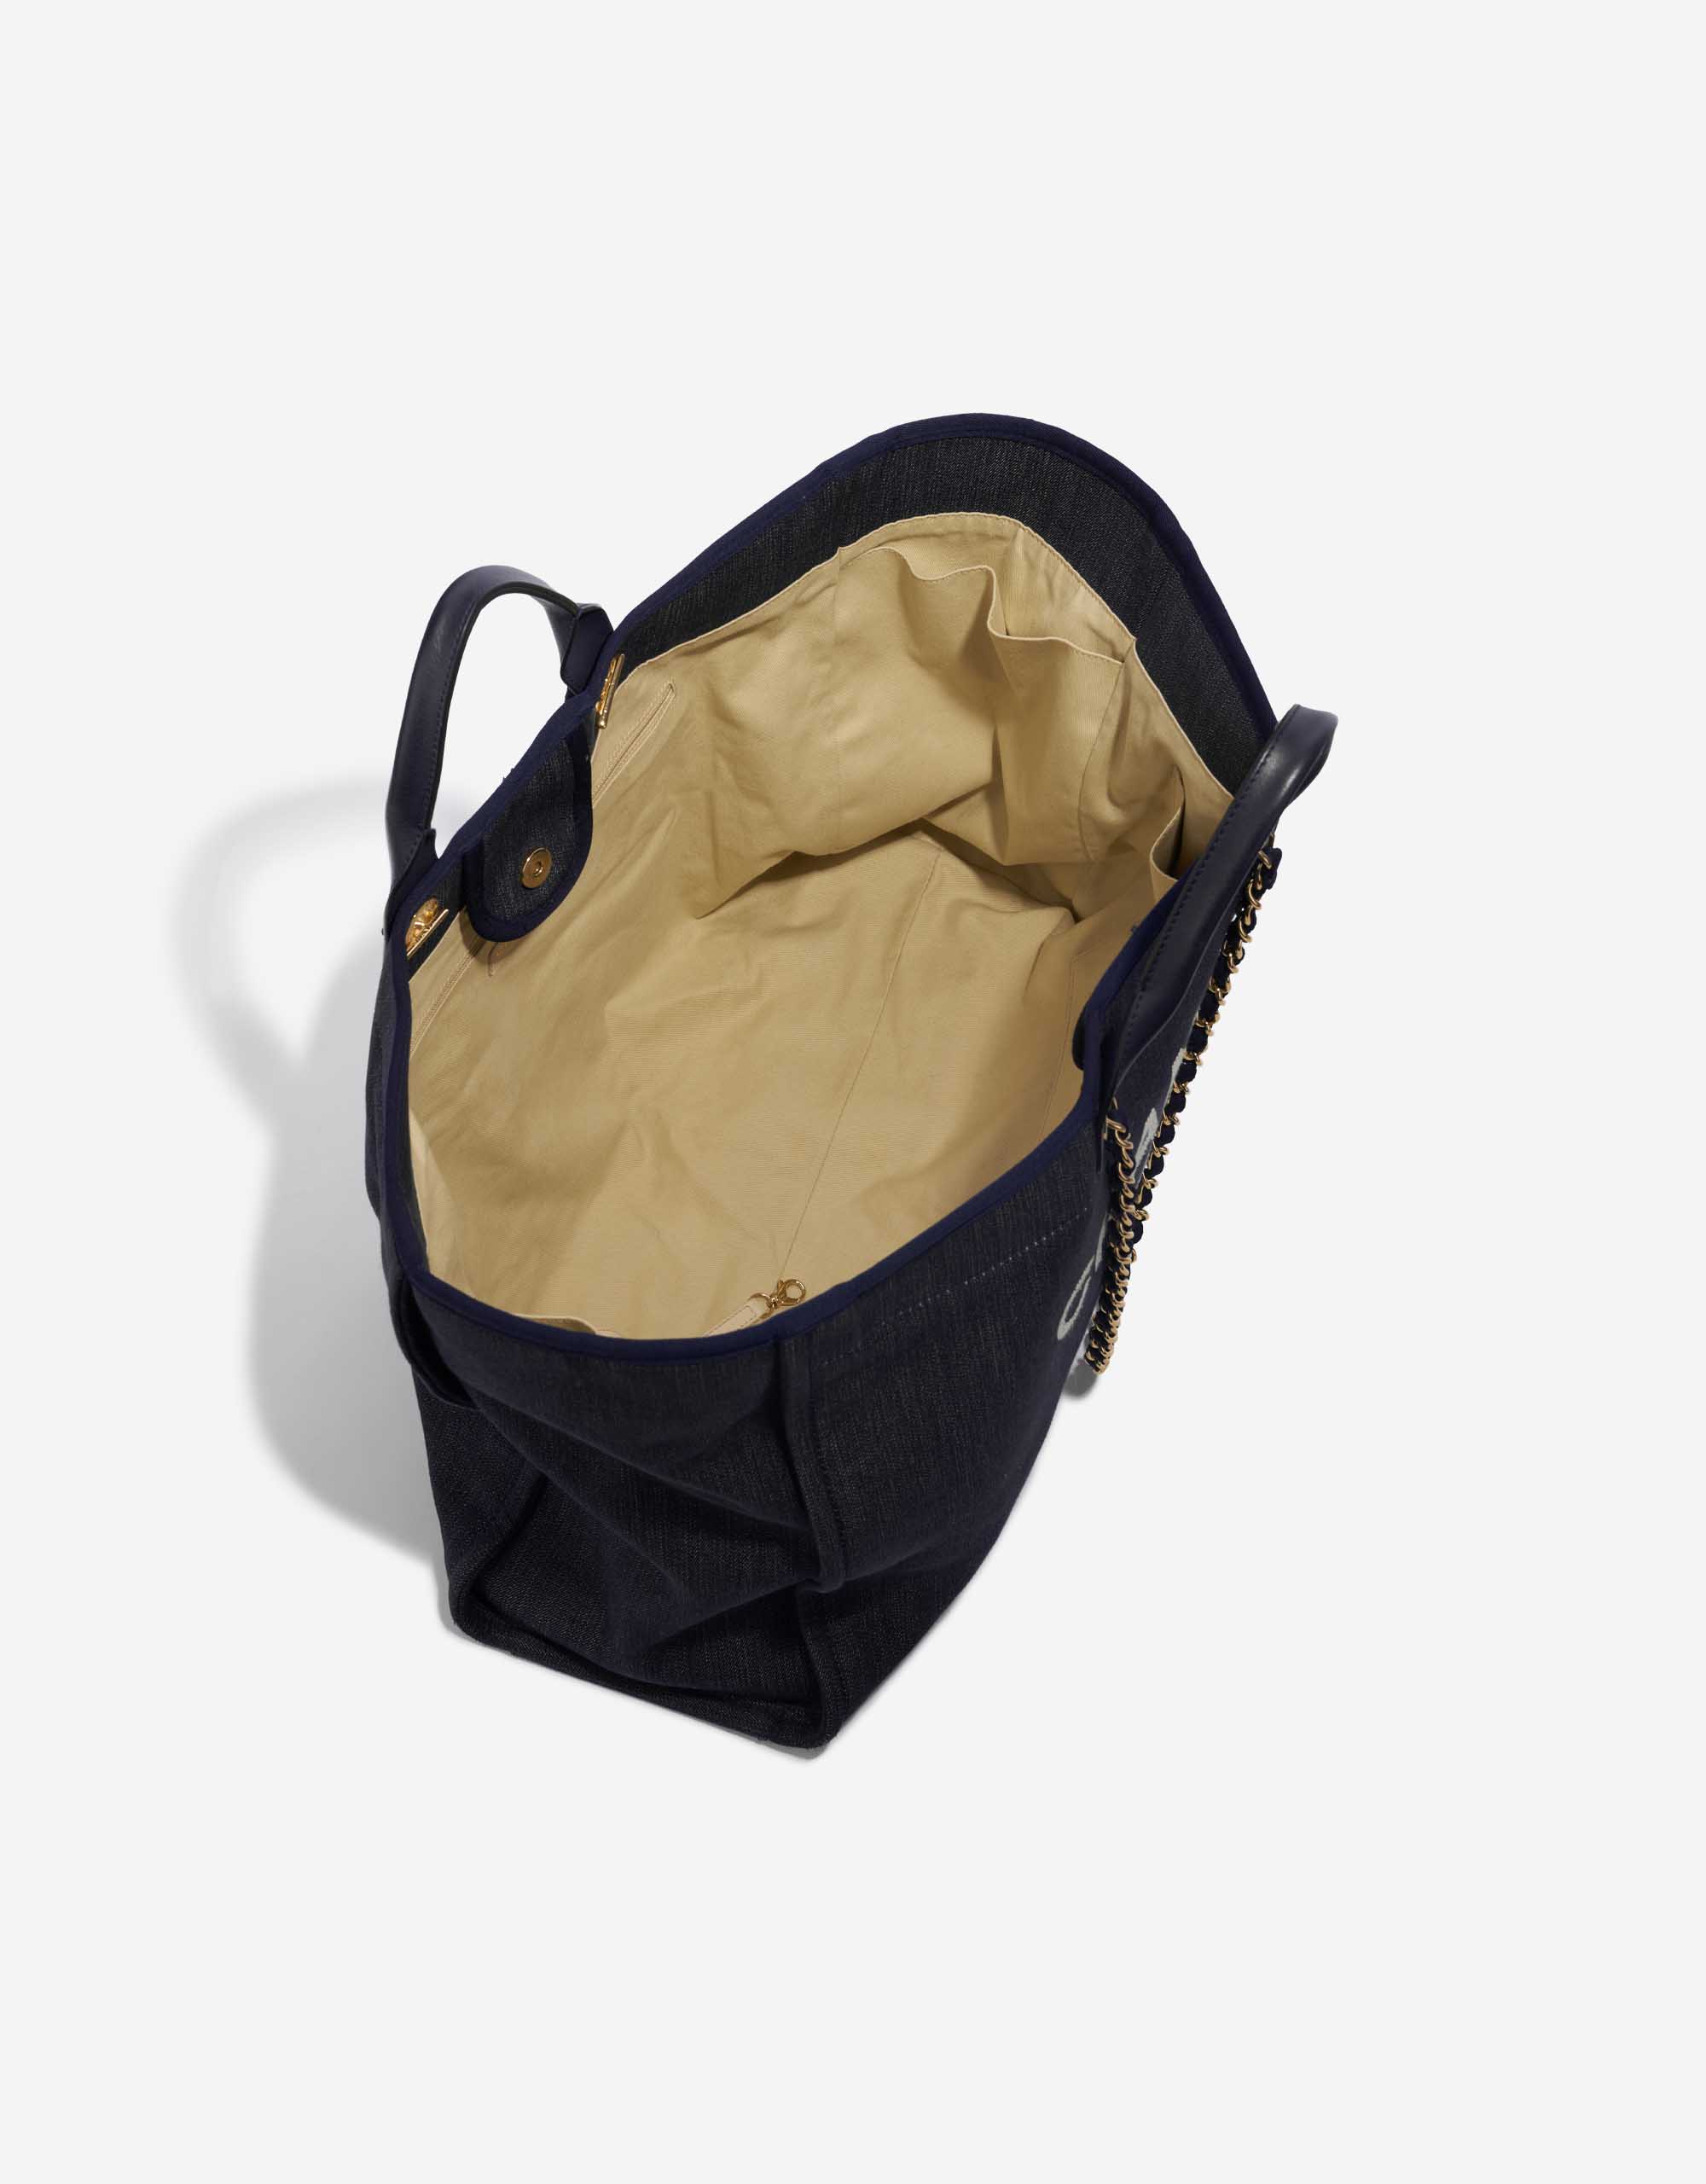 Pre-owned Chanel bag Deauville Maxi Denim Blue Blue Inside | Sell your designer bag on Saclab.com